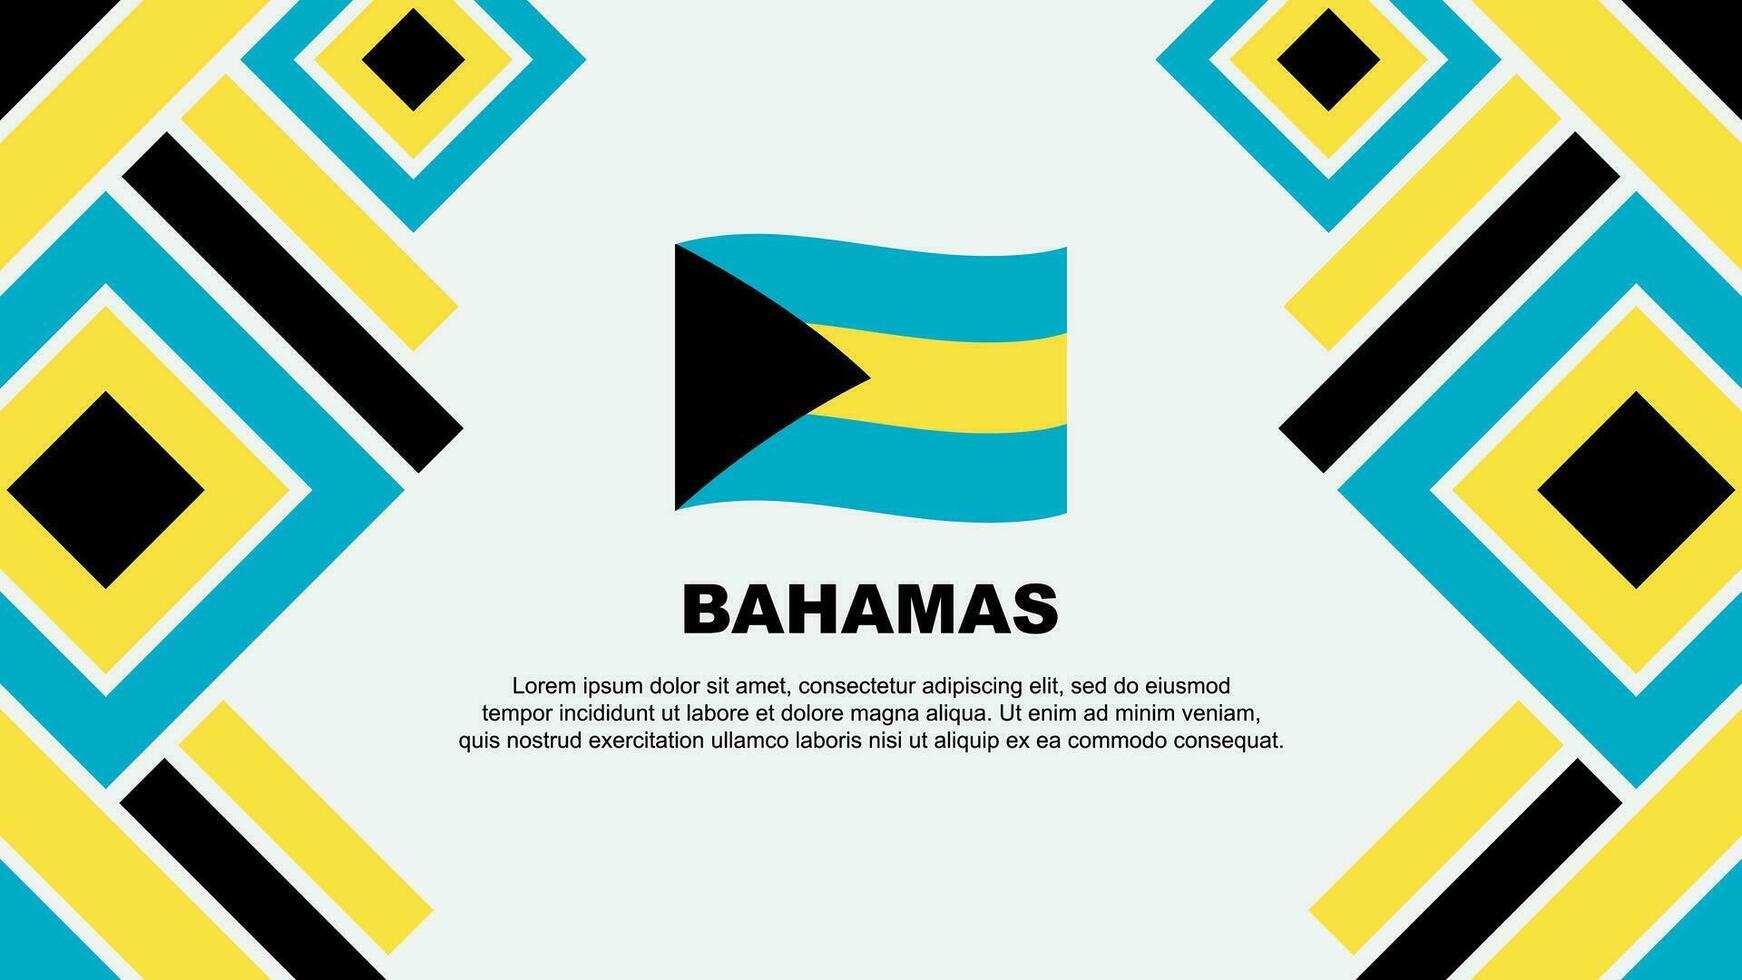 Bahamas Flag Abstract Background Design Template. Bahamas Independence Day Banner Wallpaper Vector Illustration. Bahamas